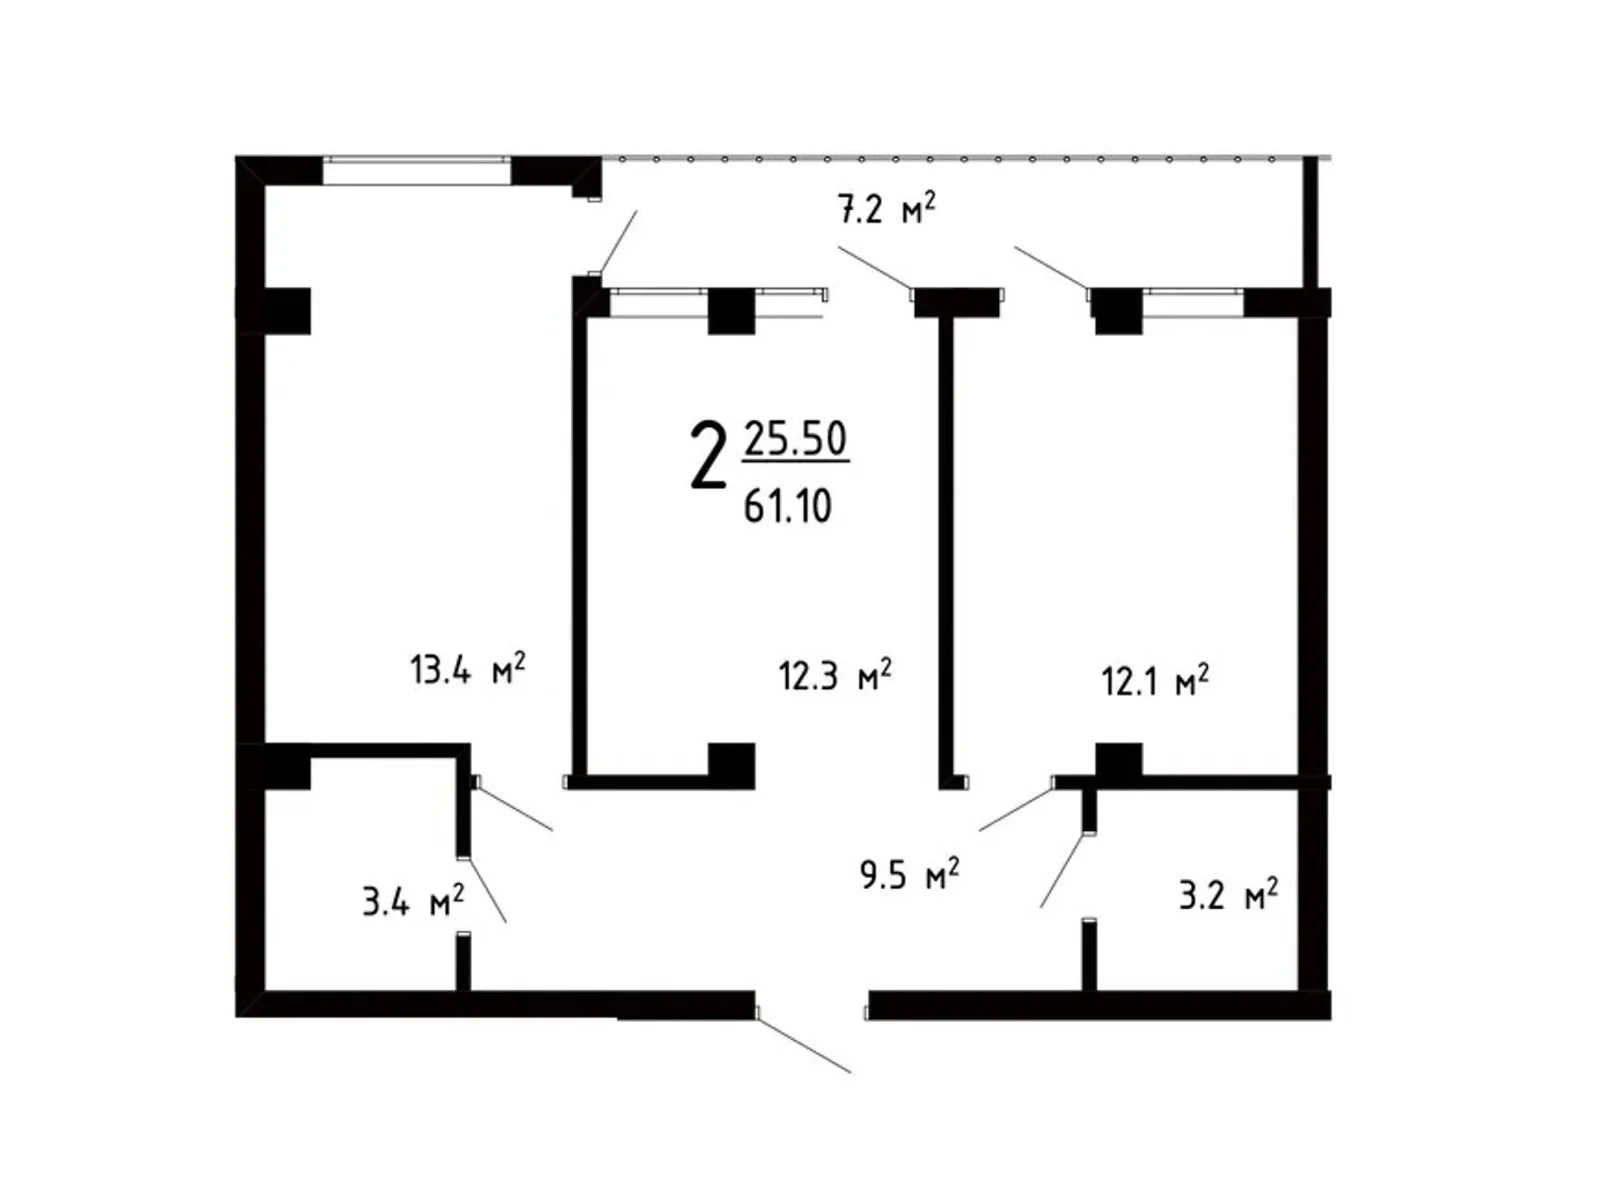 Продается 2-комнатная квартира 61.1 кв. м в Годилове, цена: 64155 $ - фото 1